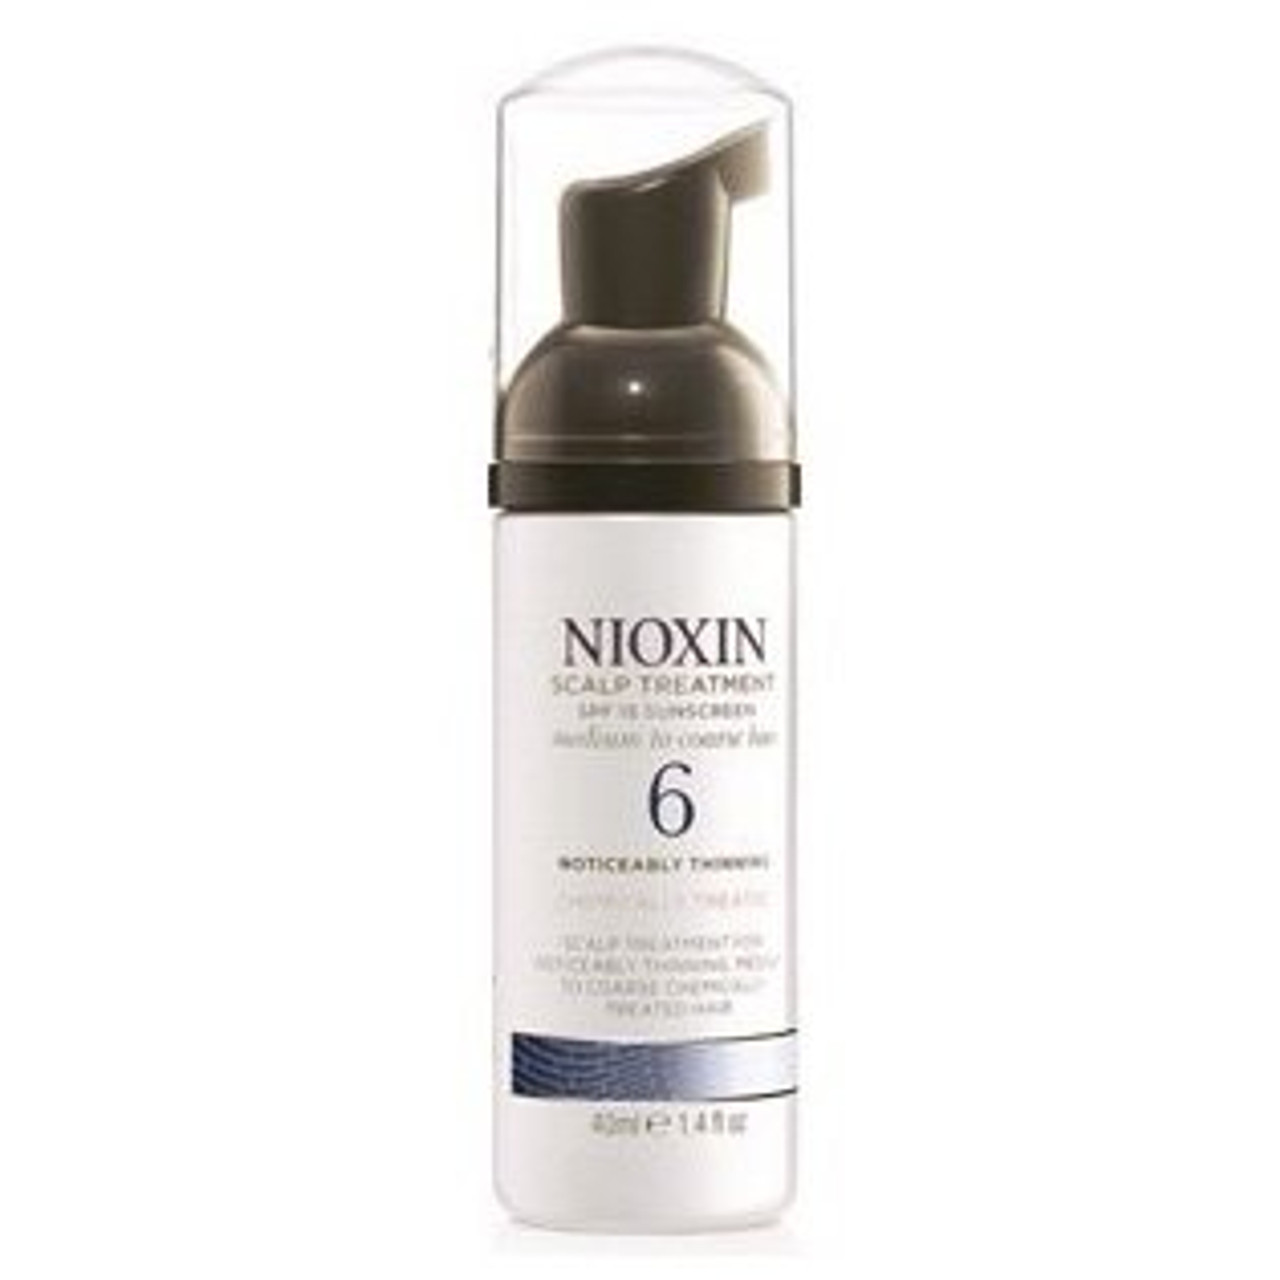 Nioxin Scalp Treatment System 6 - 1.35 oz